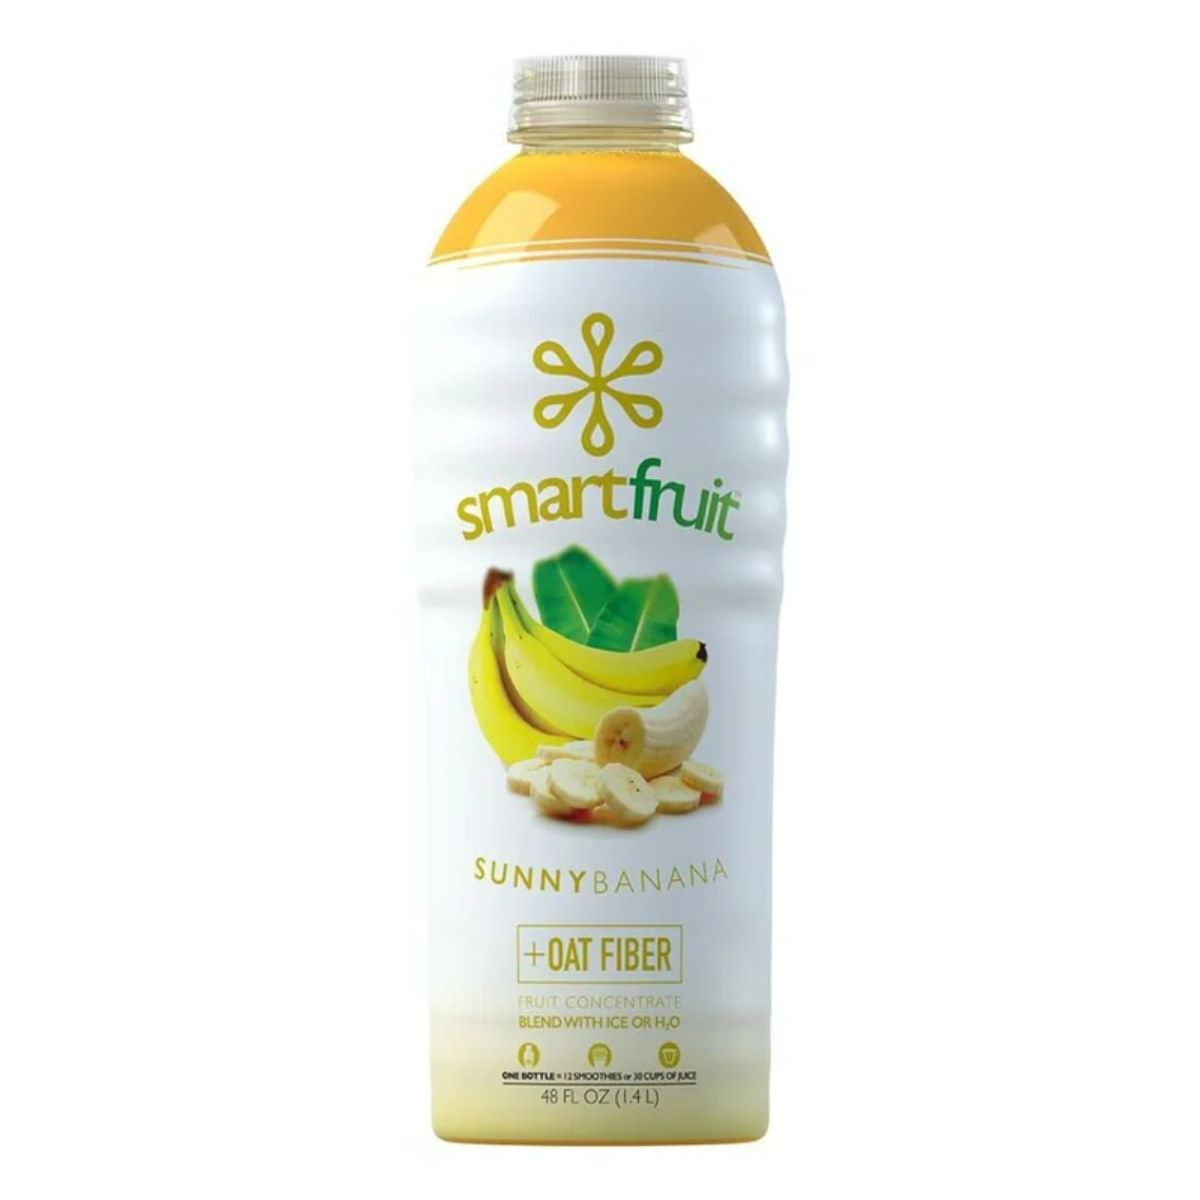 SmartFruit - 100% Real Fruit Puree: 48 fl. oz. Bottle: Sunny Banana